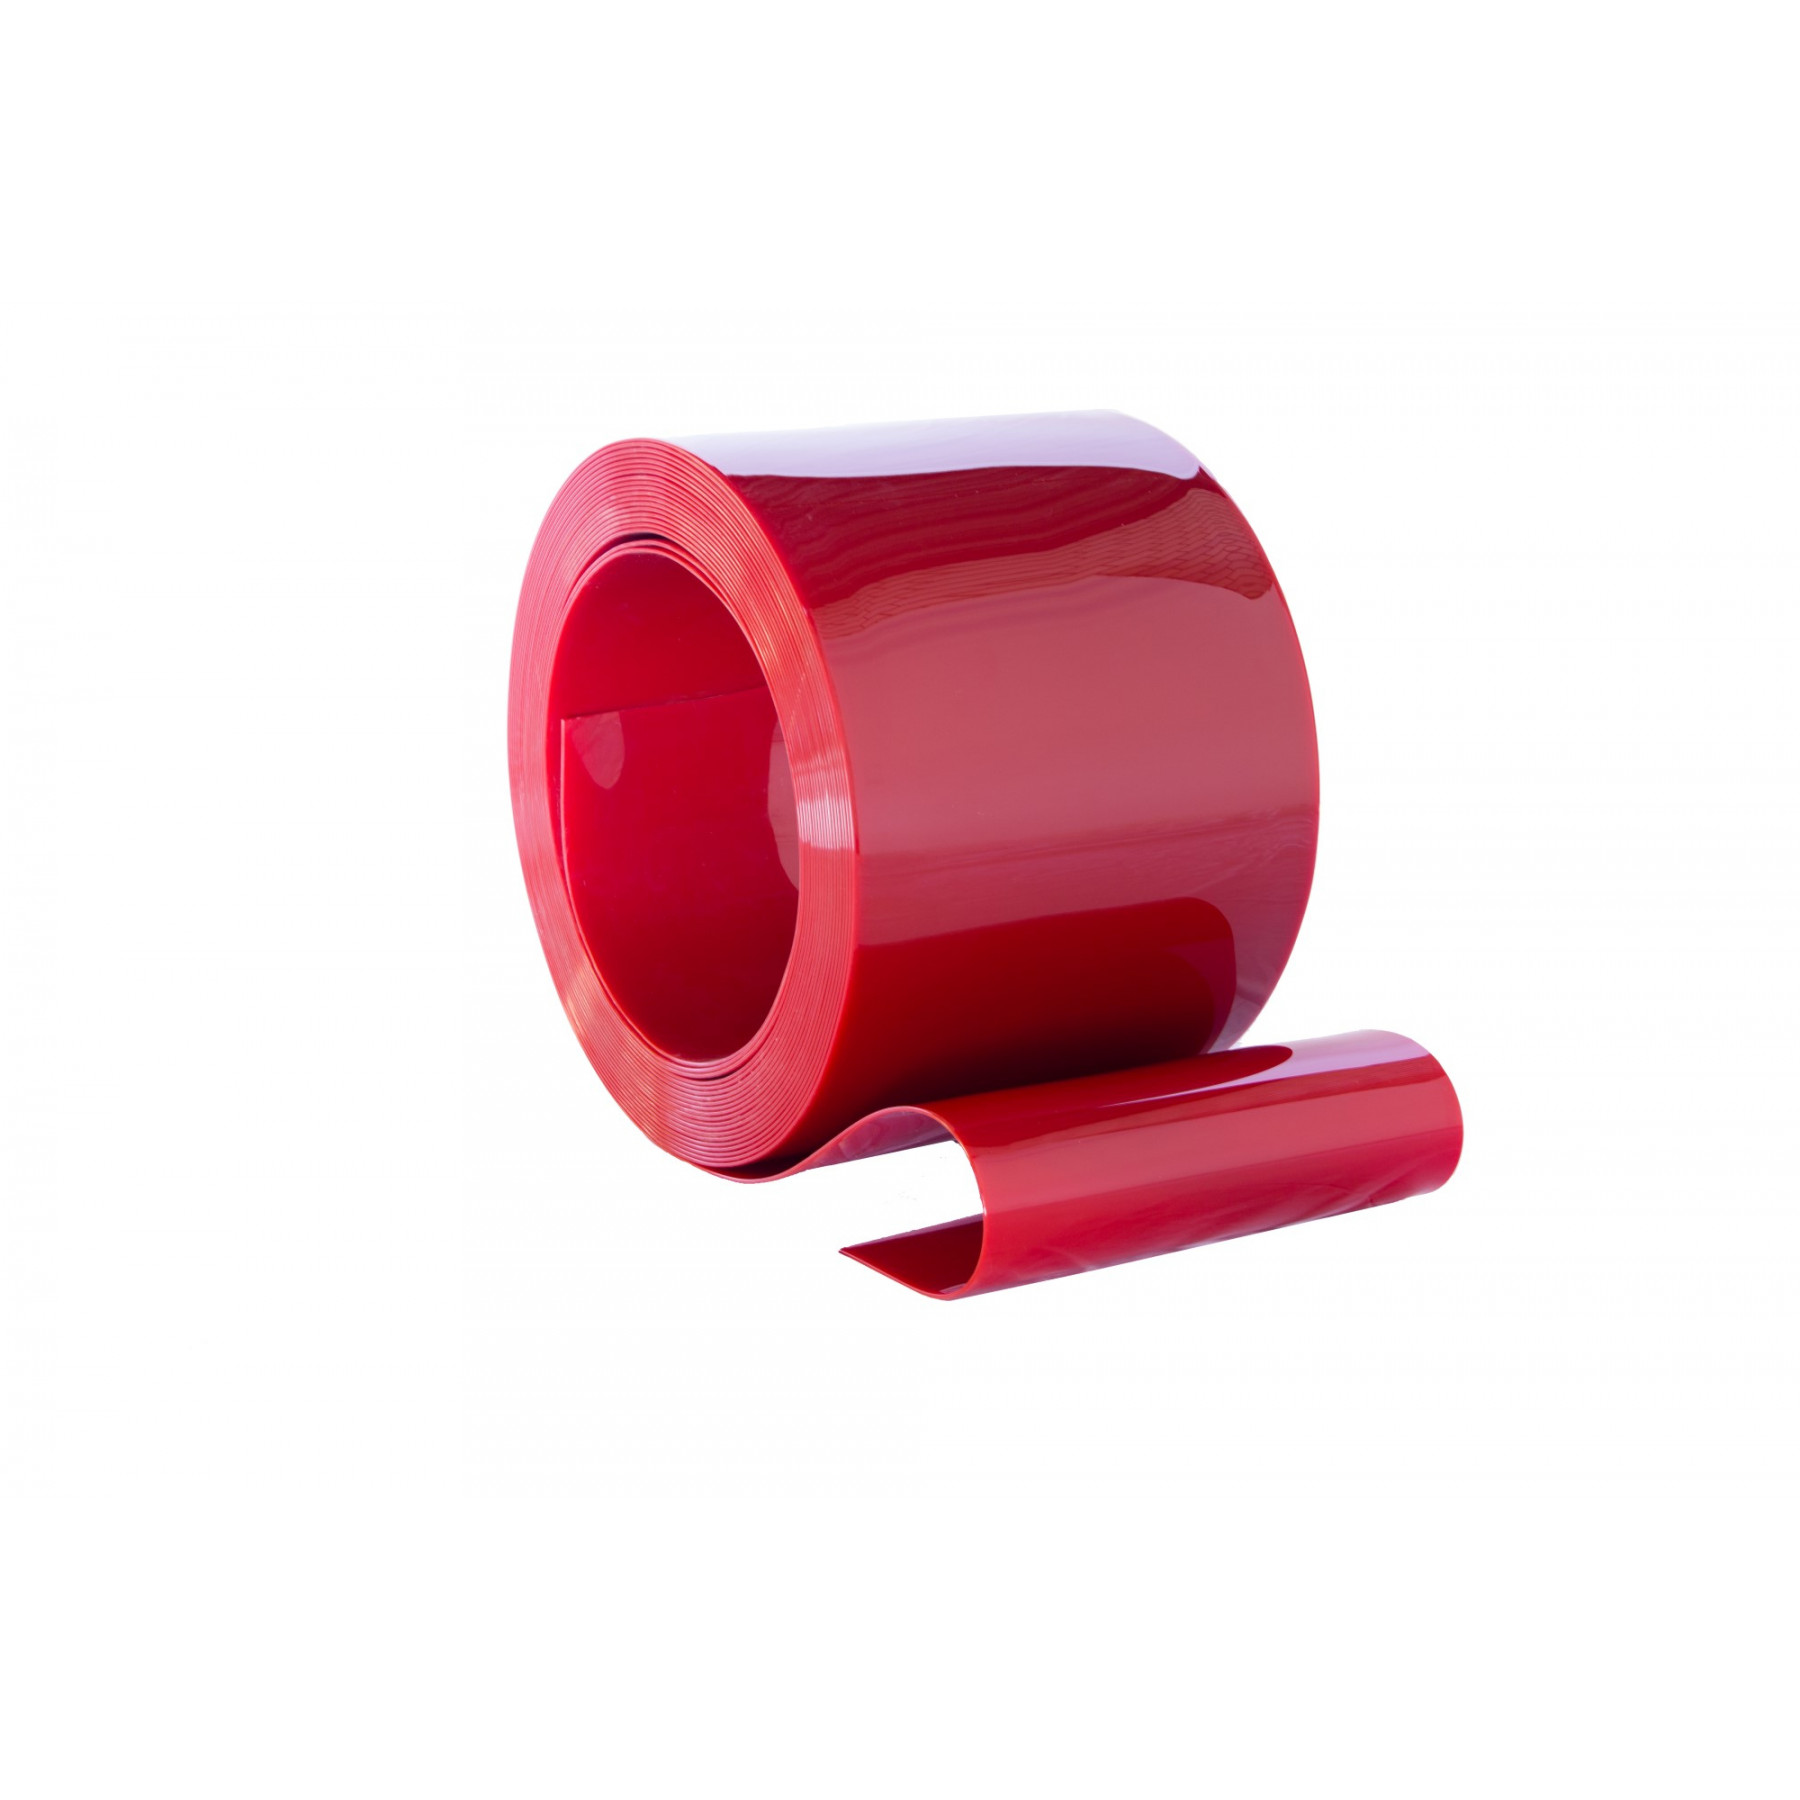 PVC Rolle, 300mm breit, 2mm dick, 50 Meter lang, Schweißqualität, Farbe Rot. transparent